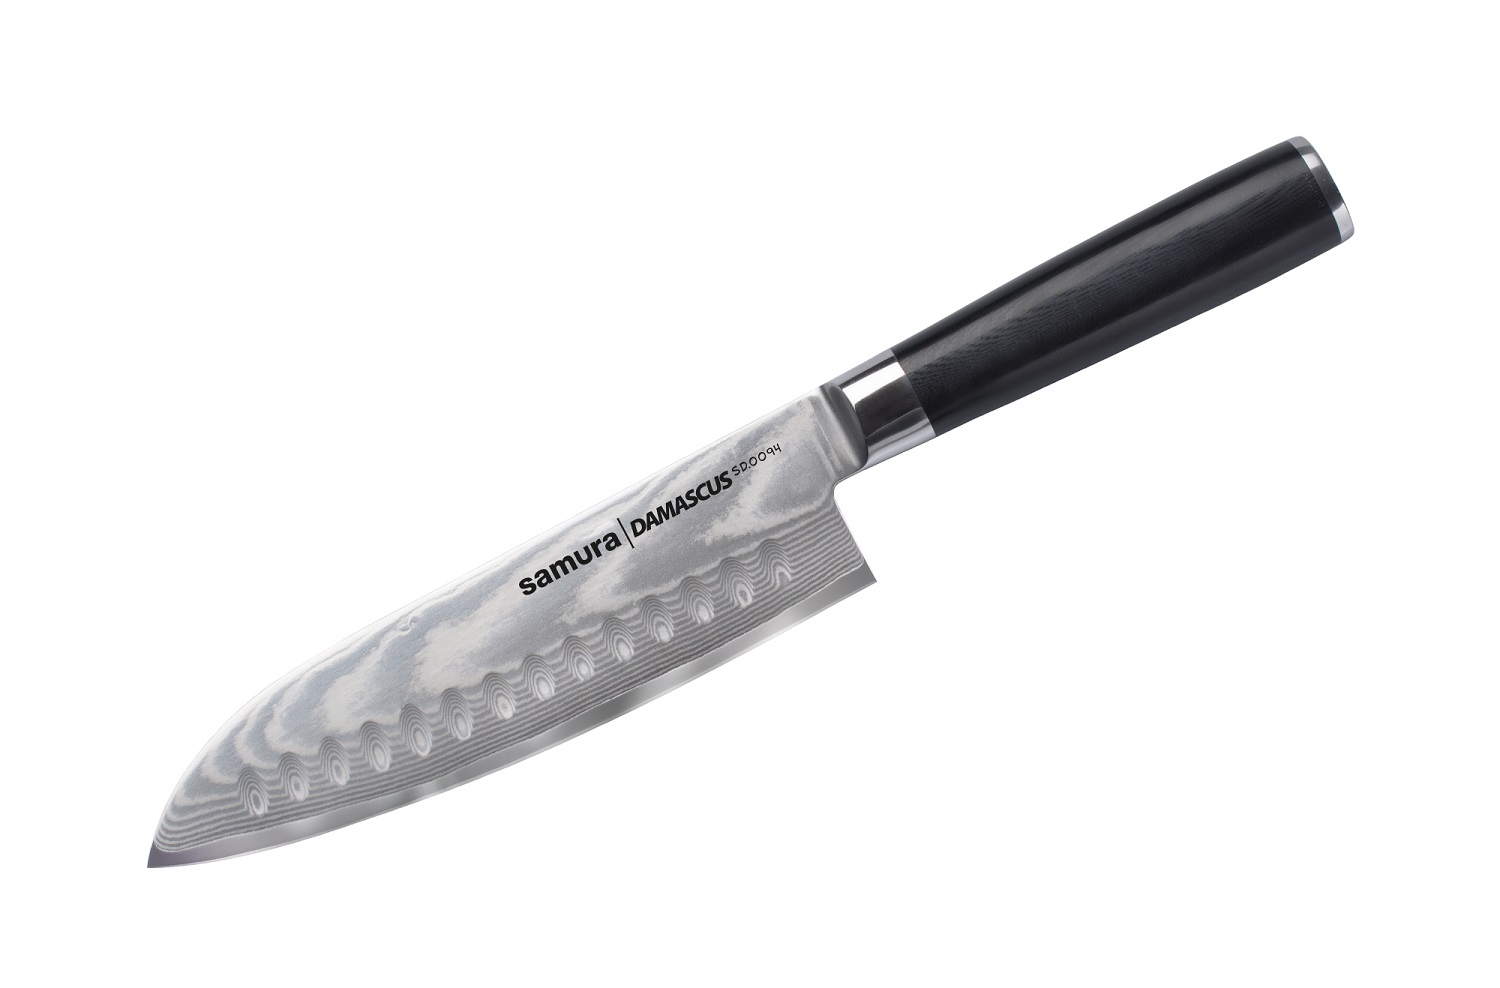 Нож Samura сантоку Damascus, 18 см, G-10, дамаск 67 слоев нож samura sultan пичак 15 9 см g 10 дамаск 67 слоев